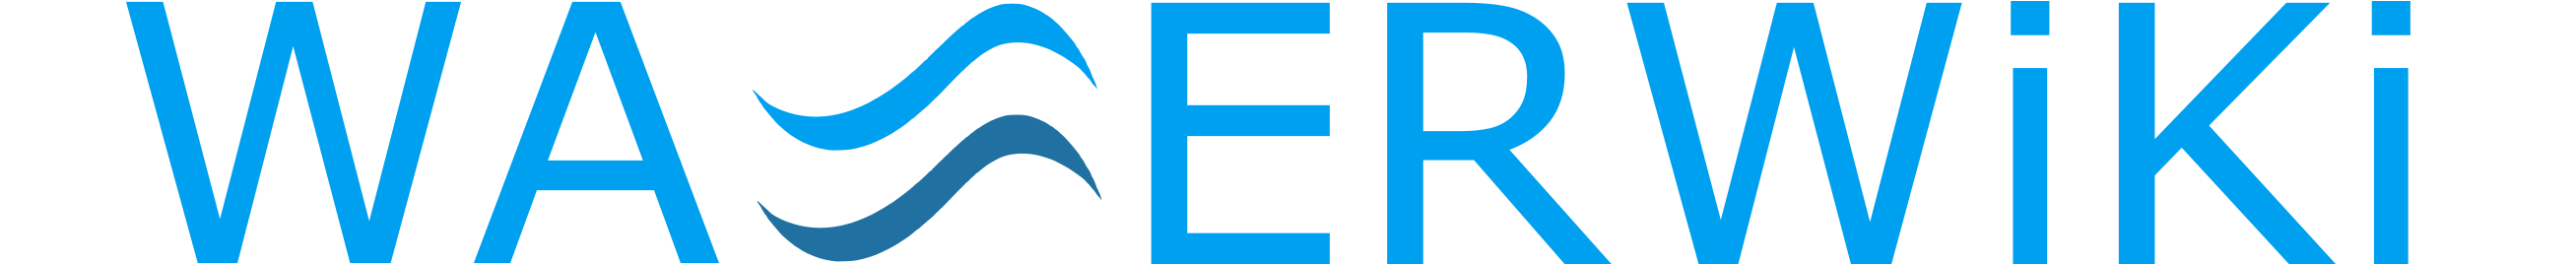 logo wasserwiki